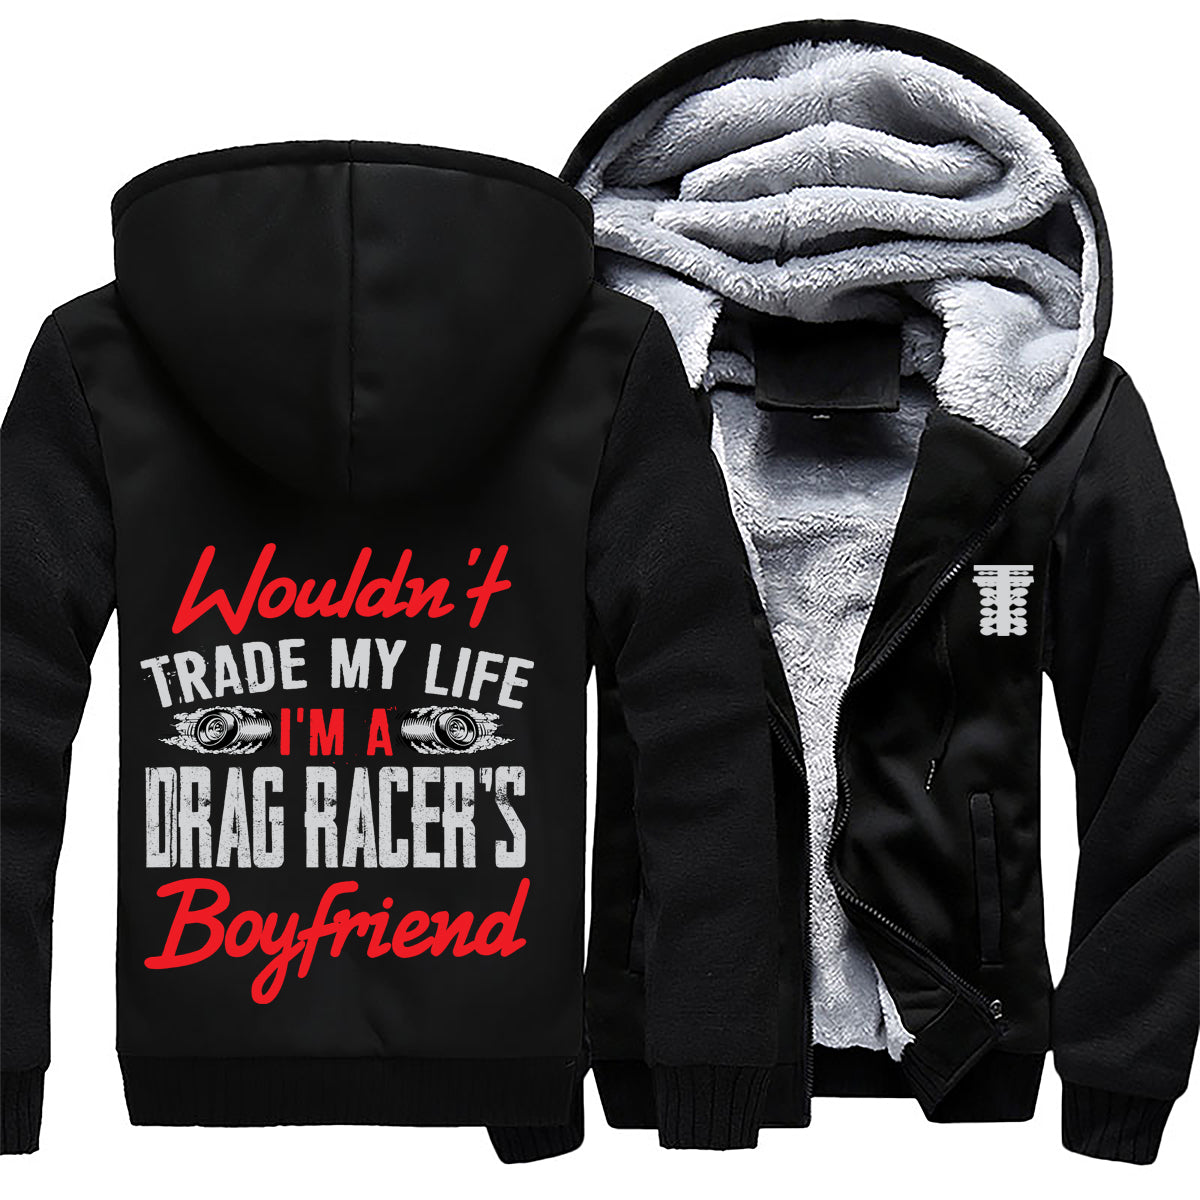 I'm A Drag Racer's Boyfriend Jacket